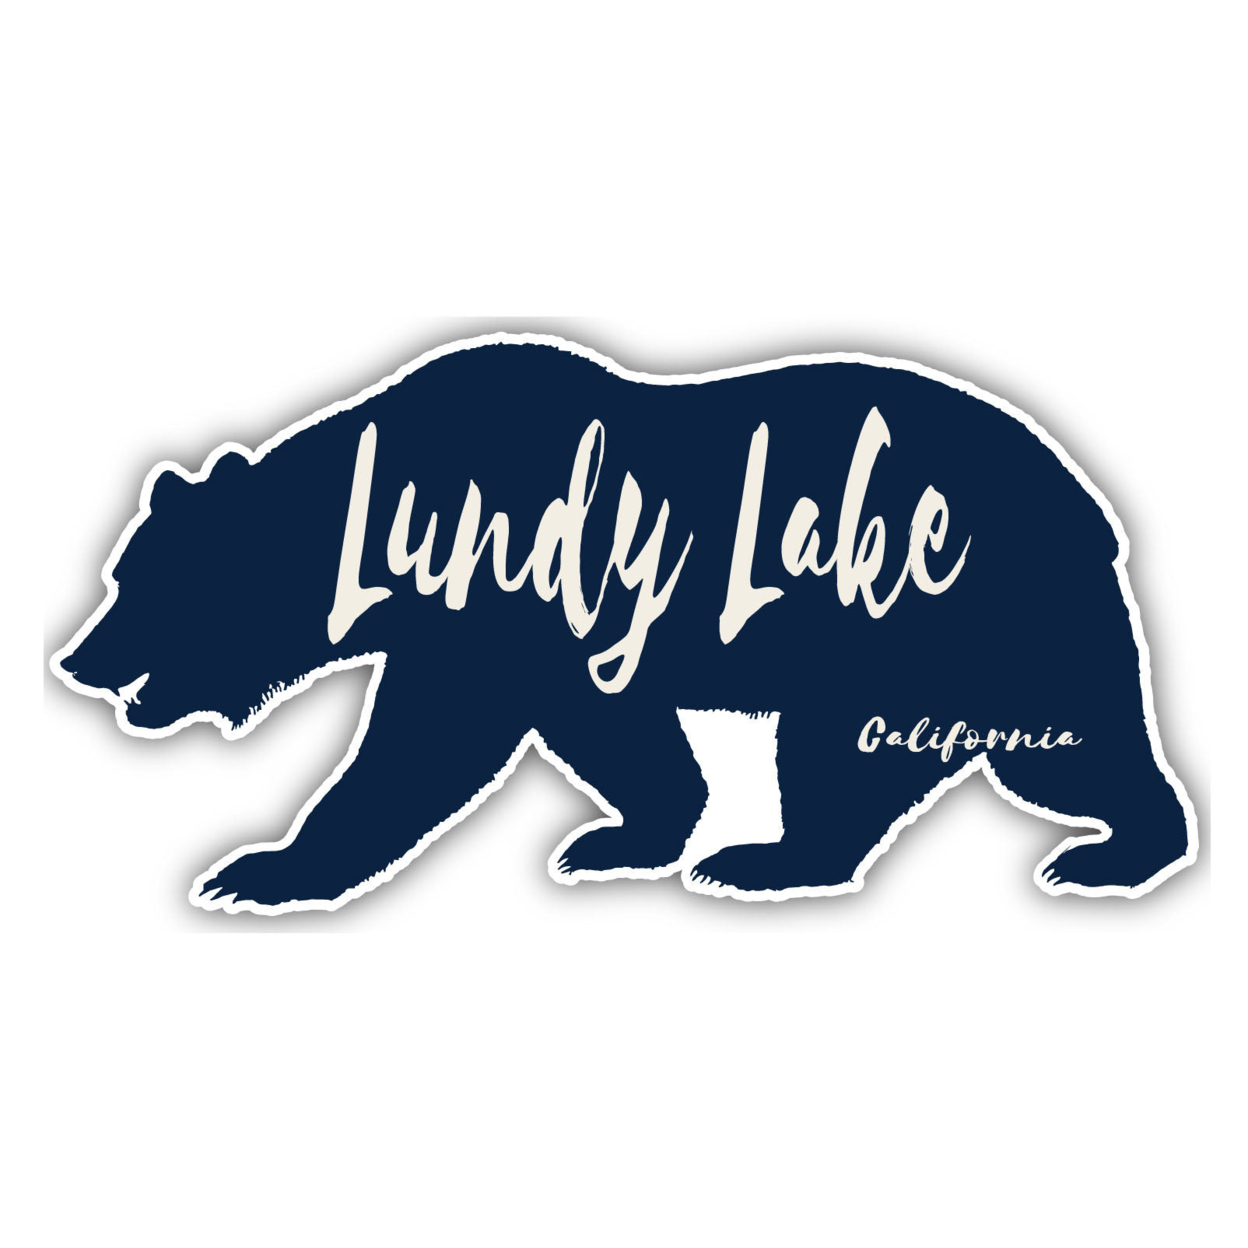 Lundy Lake California Souvenir Decorative Stickers (Choose Theme And Size) - 2-Inch, Bear